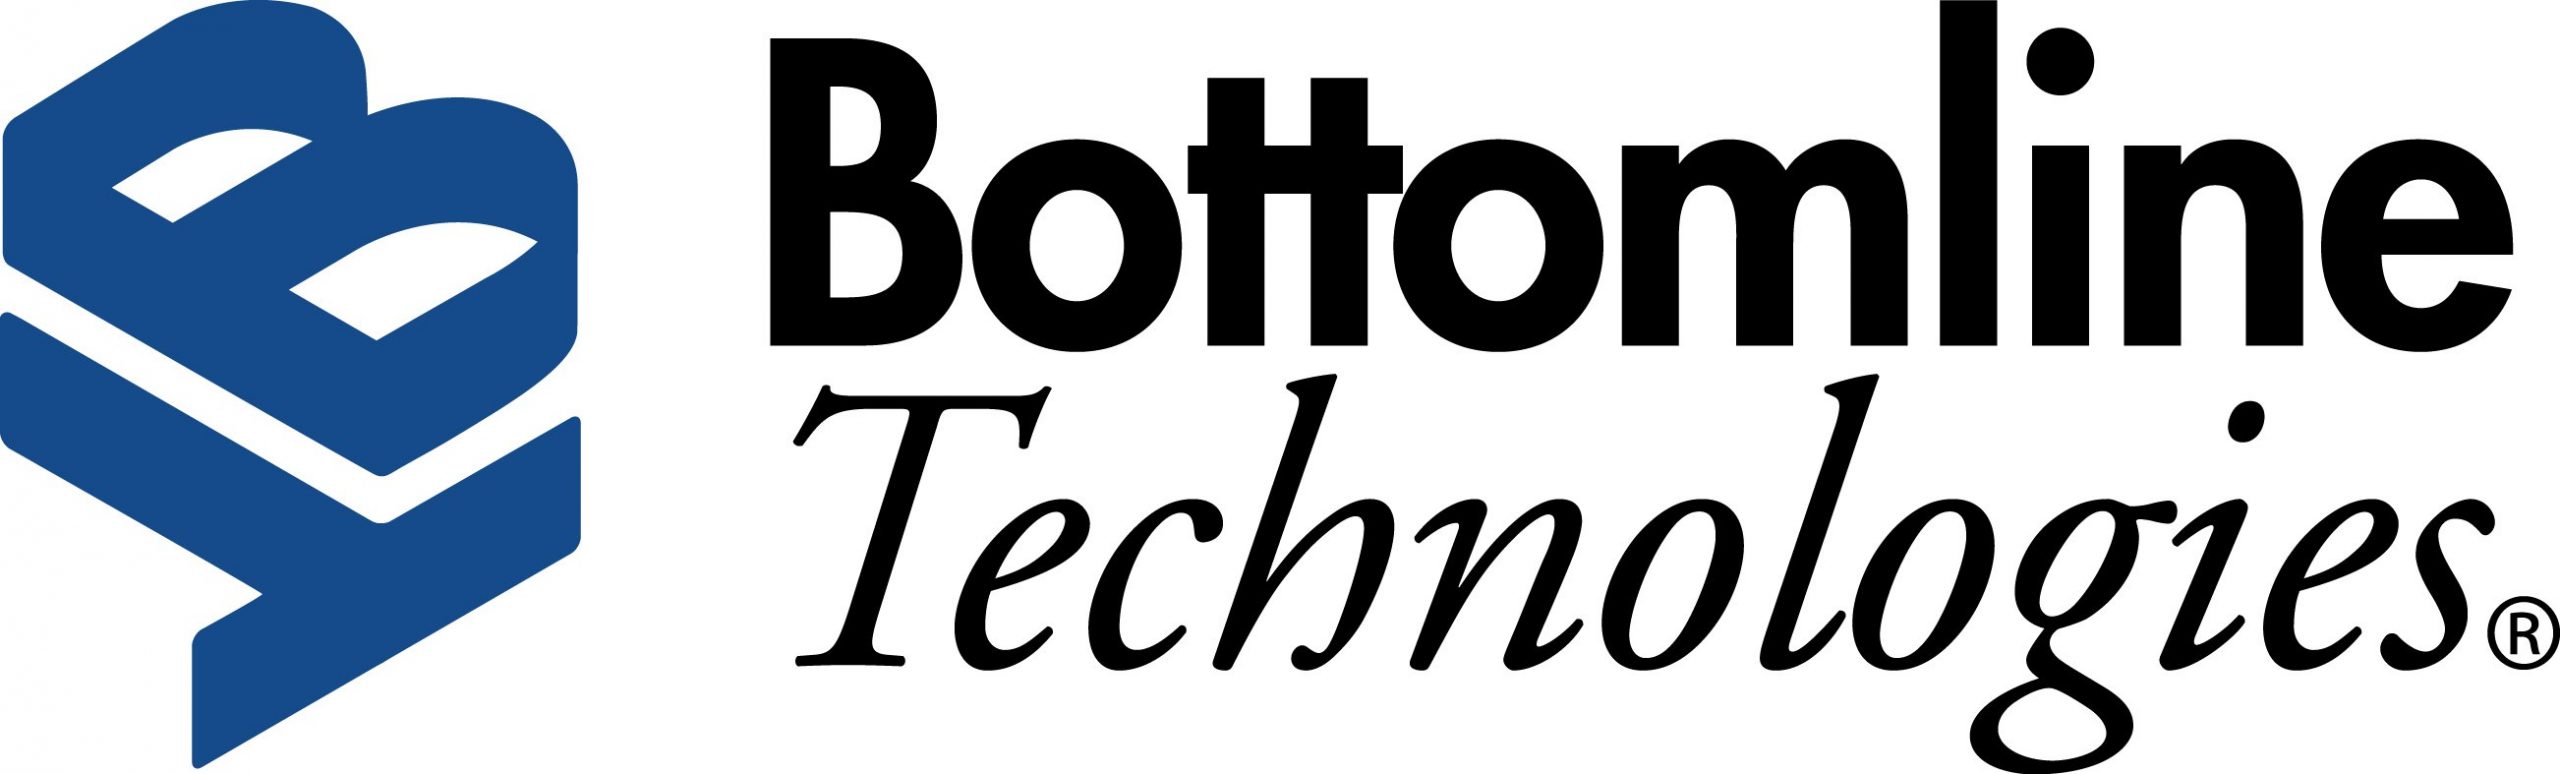 bottomline-technologies-logo